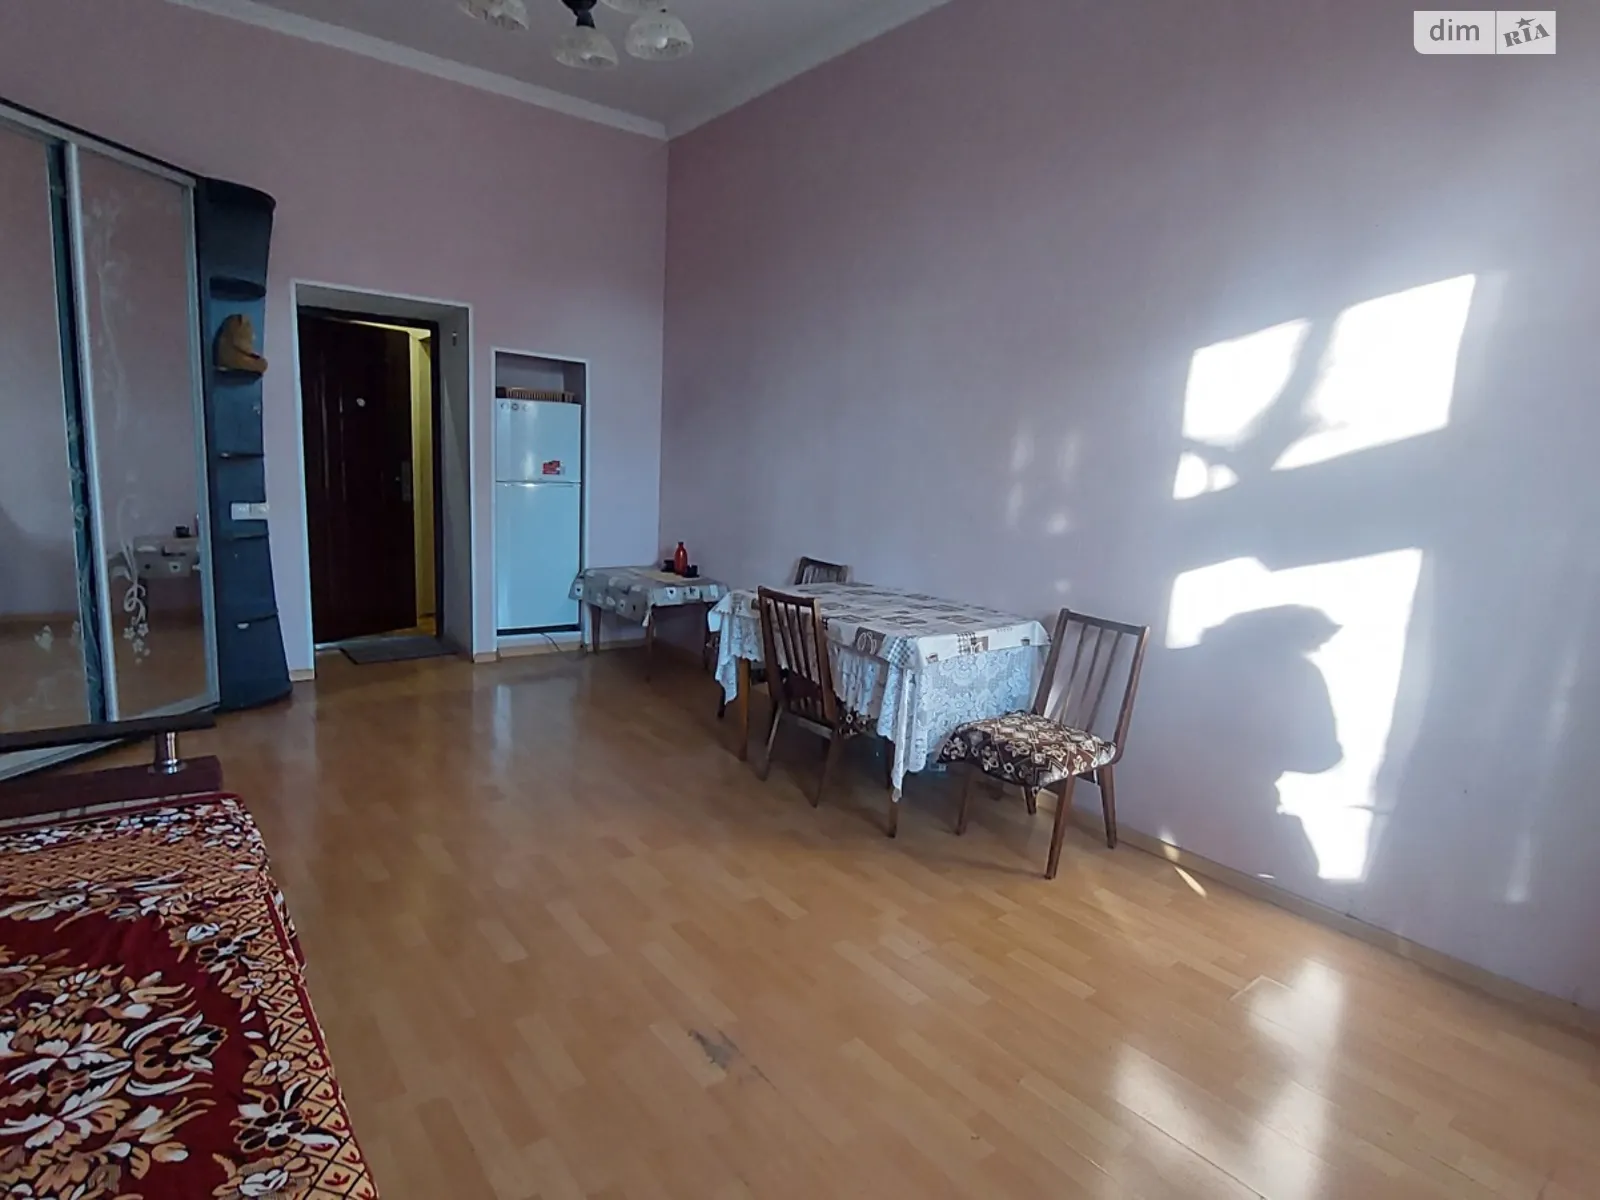 Продается комната 35 кв. м в Одессе, цена: 11350 $ - фото 1